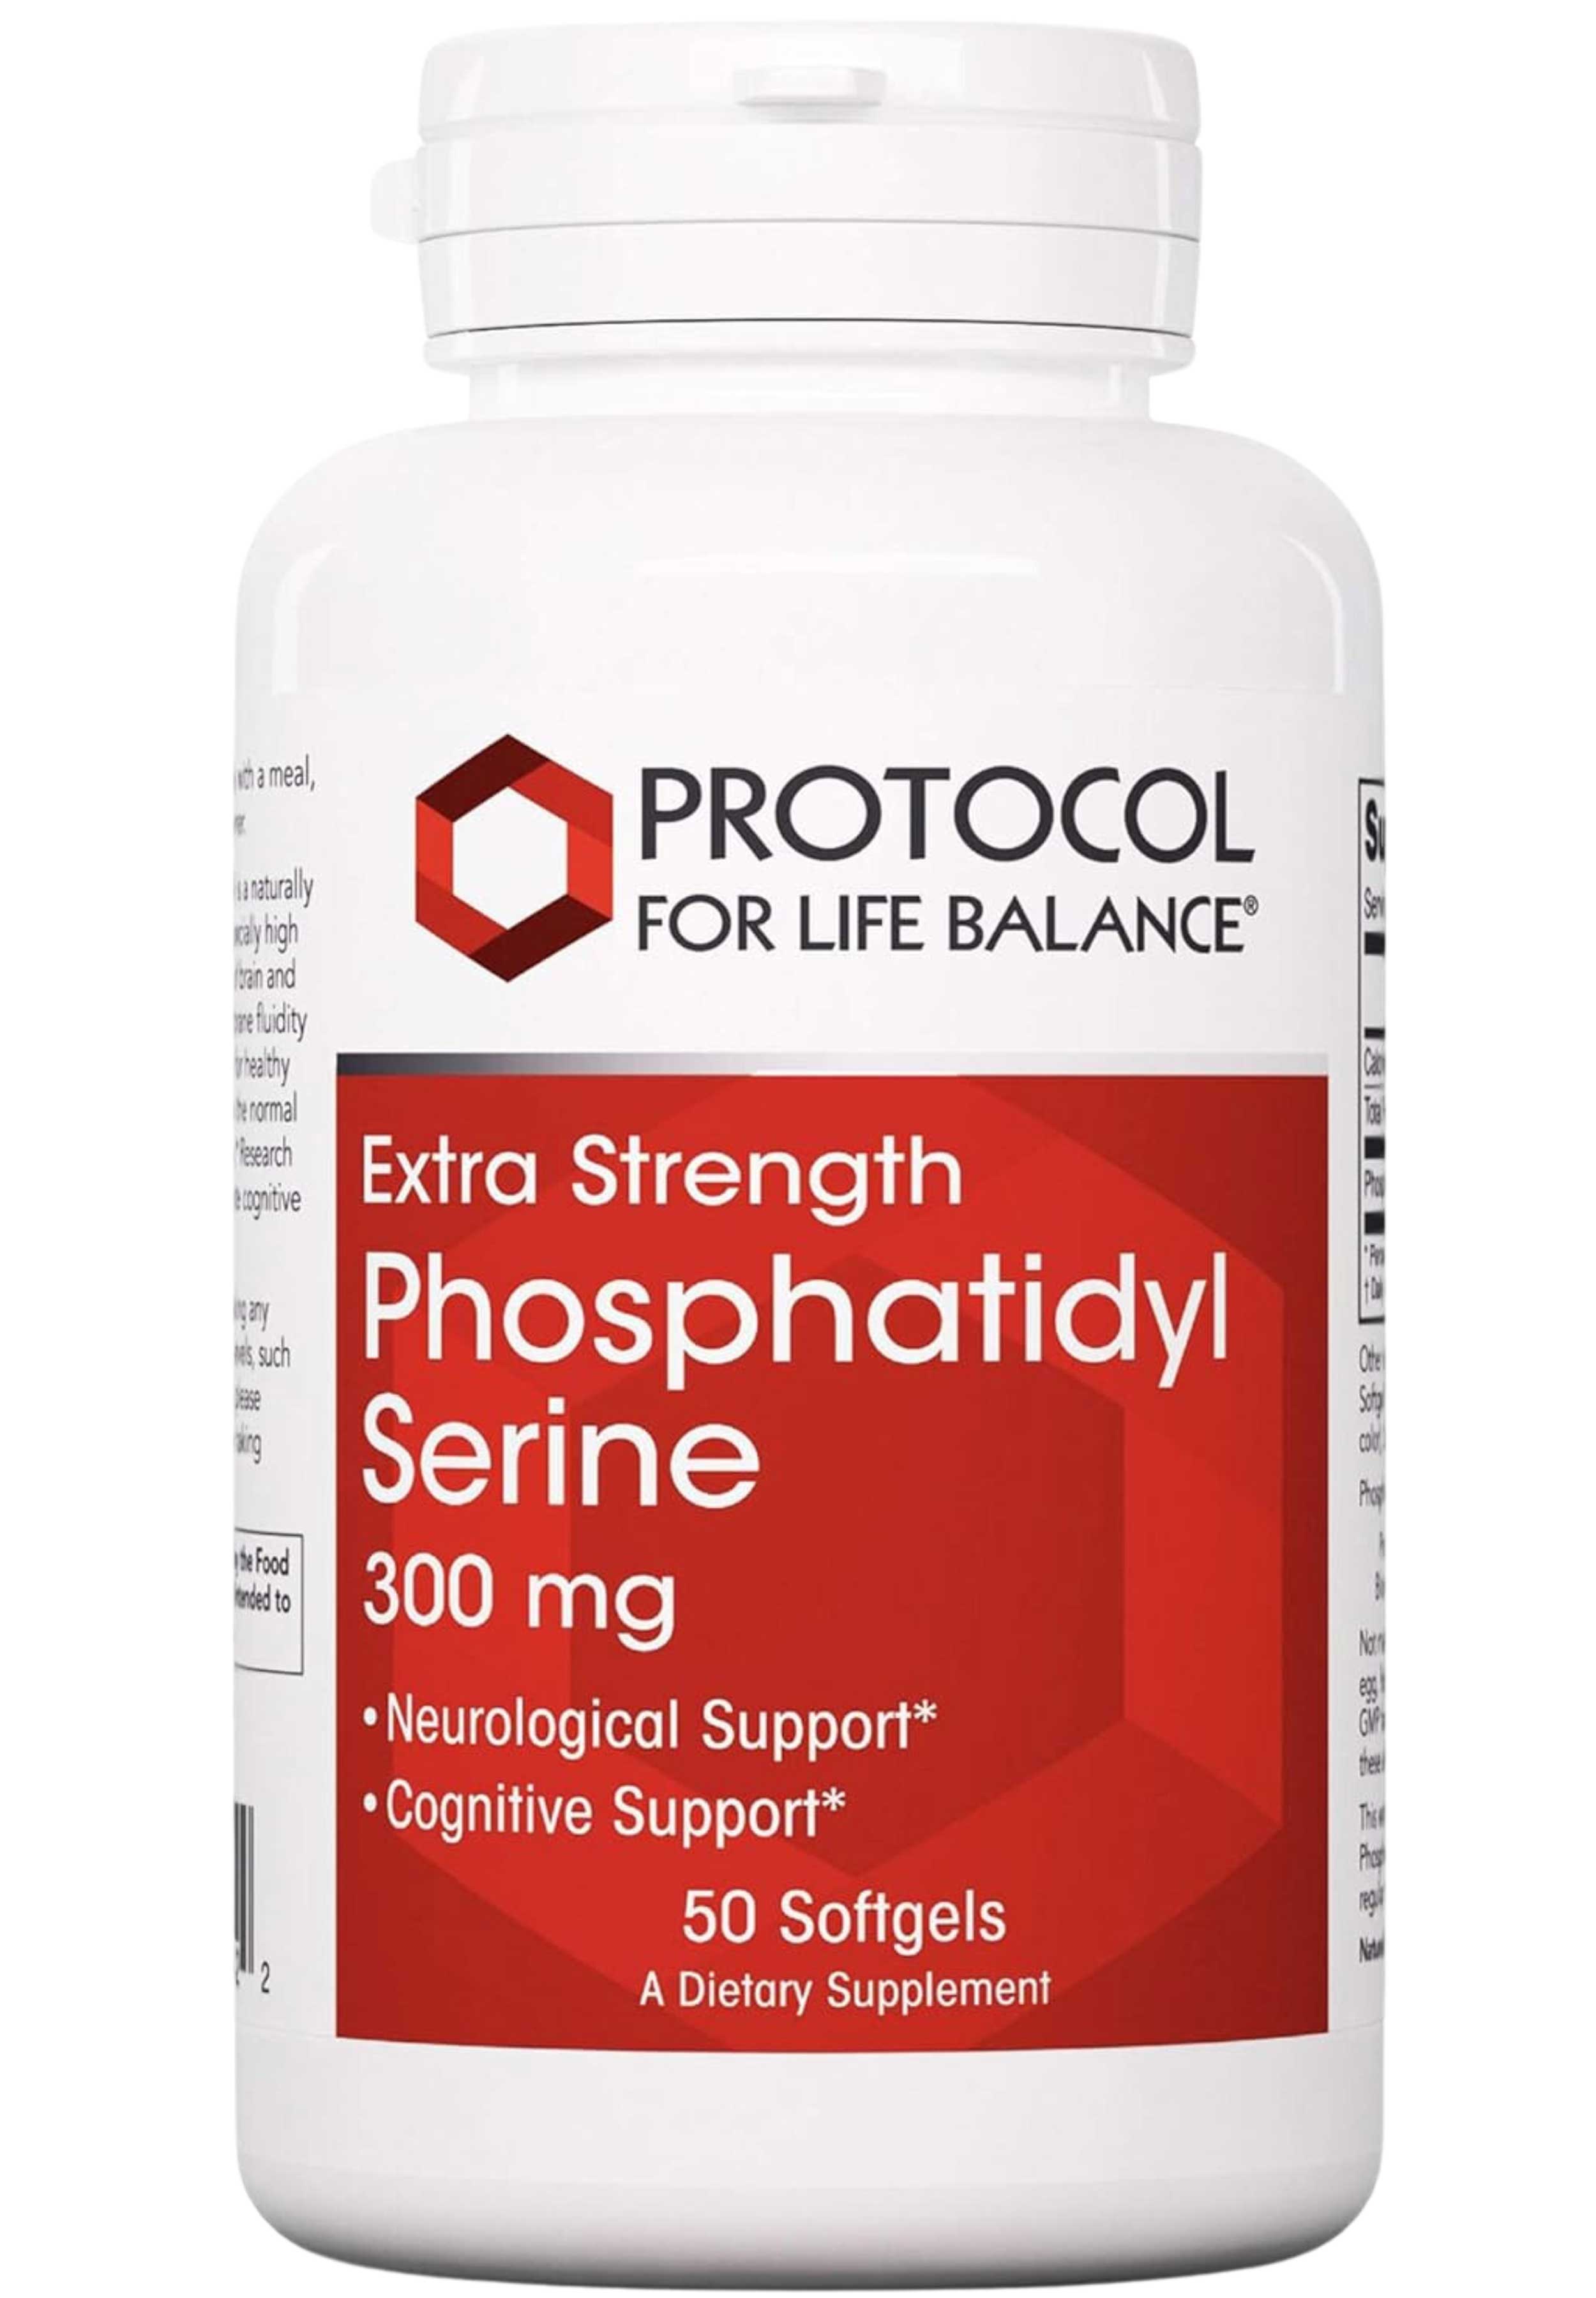 Protocol for Life Balance Extra Strength Phosphatidyl Serine 300 mg